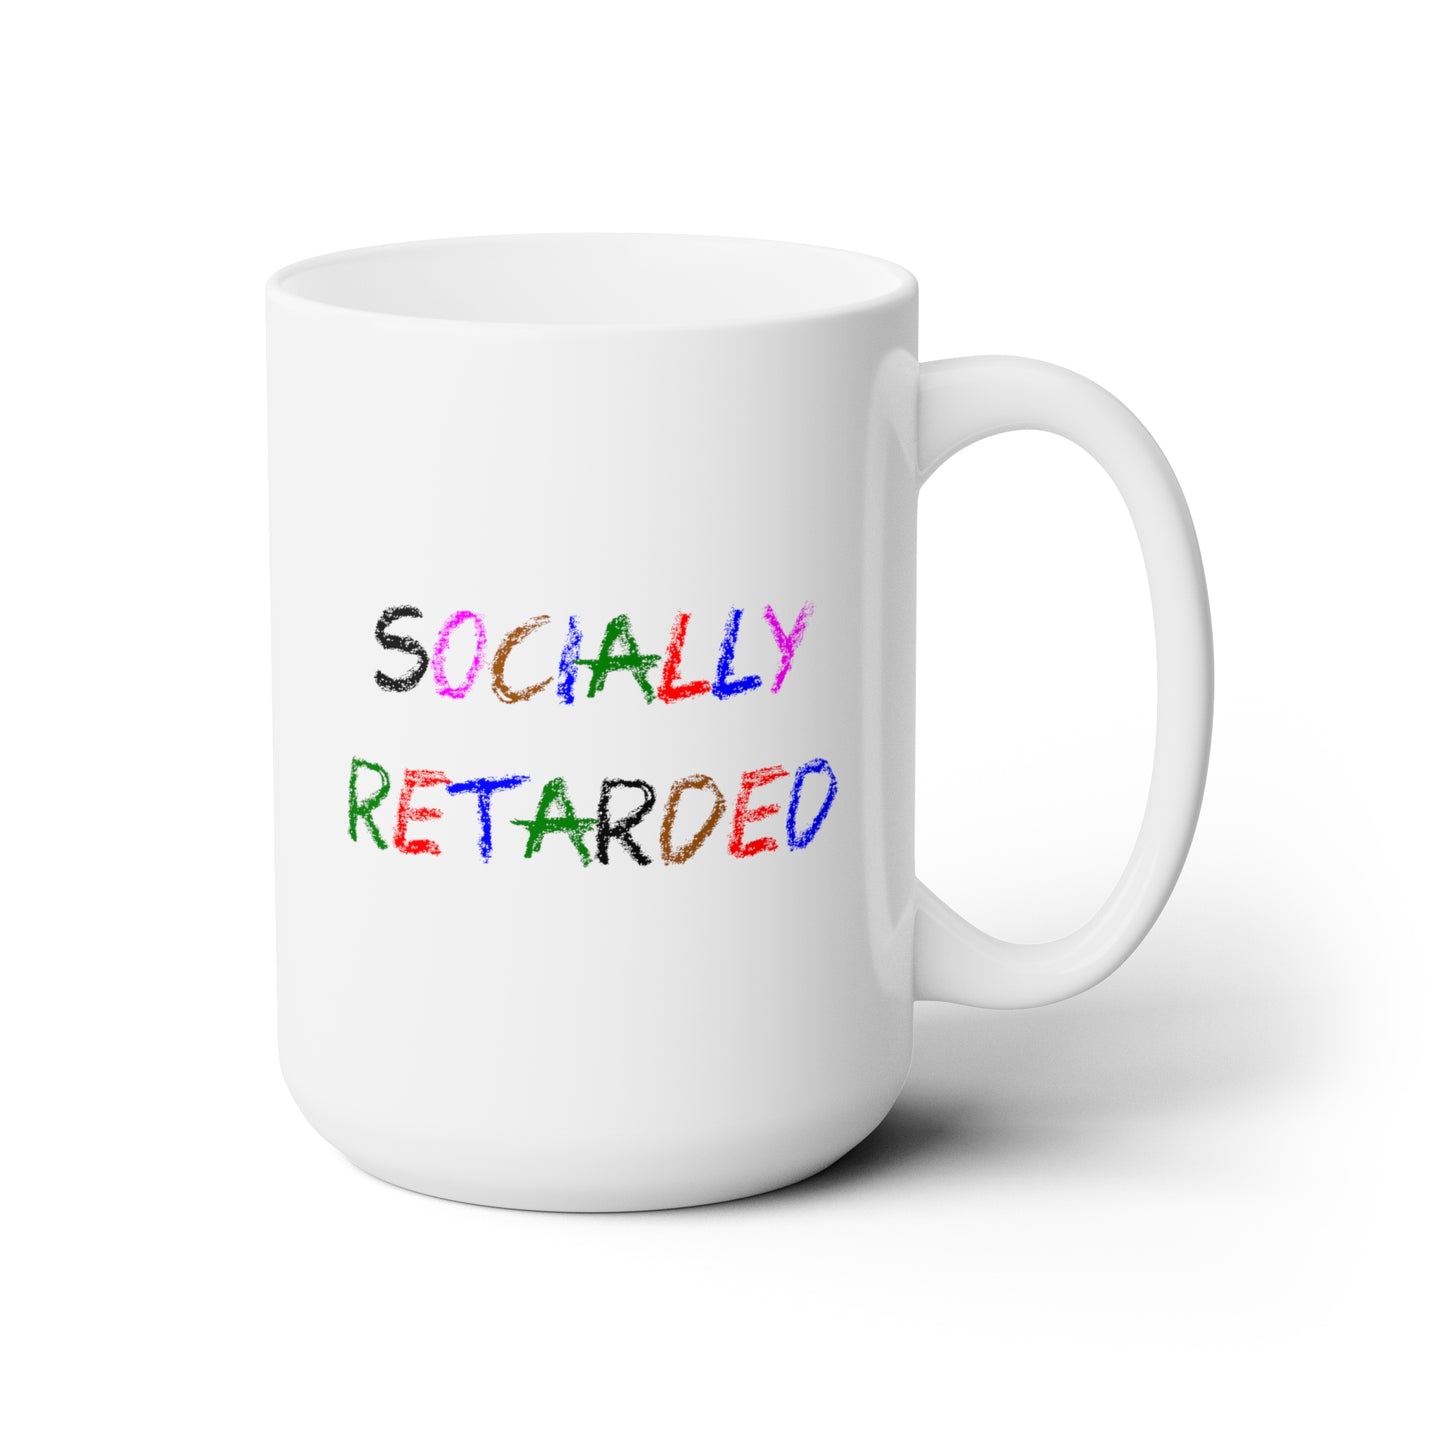 Socially Retarded - Coffee Mug